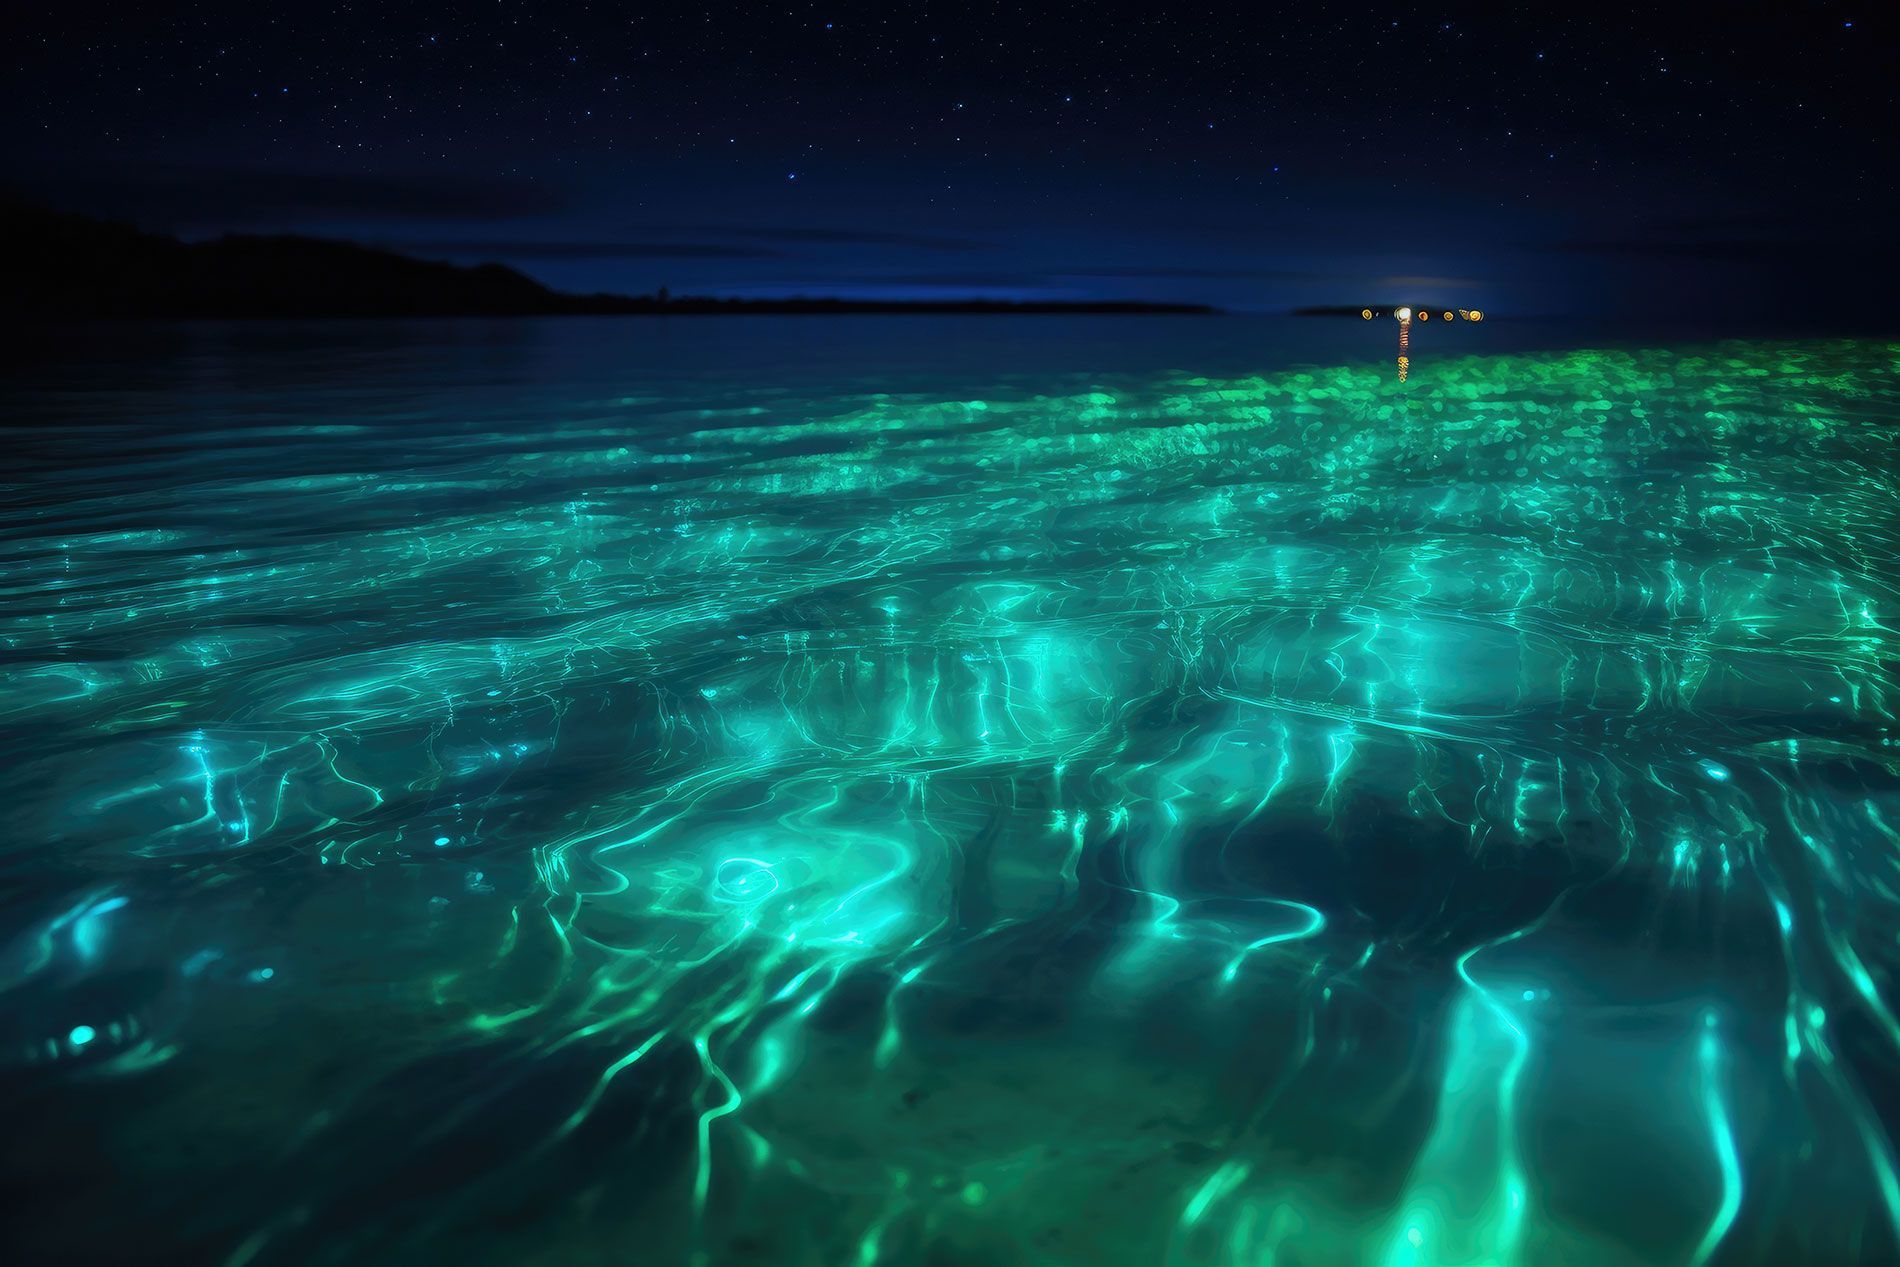 Deep Sea Fish with Bioluminescent Lights